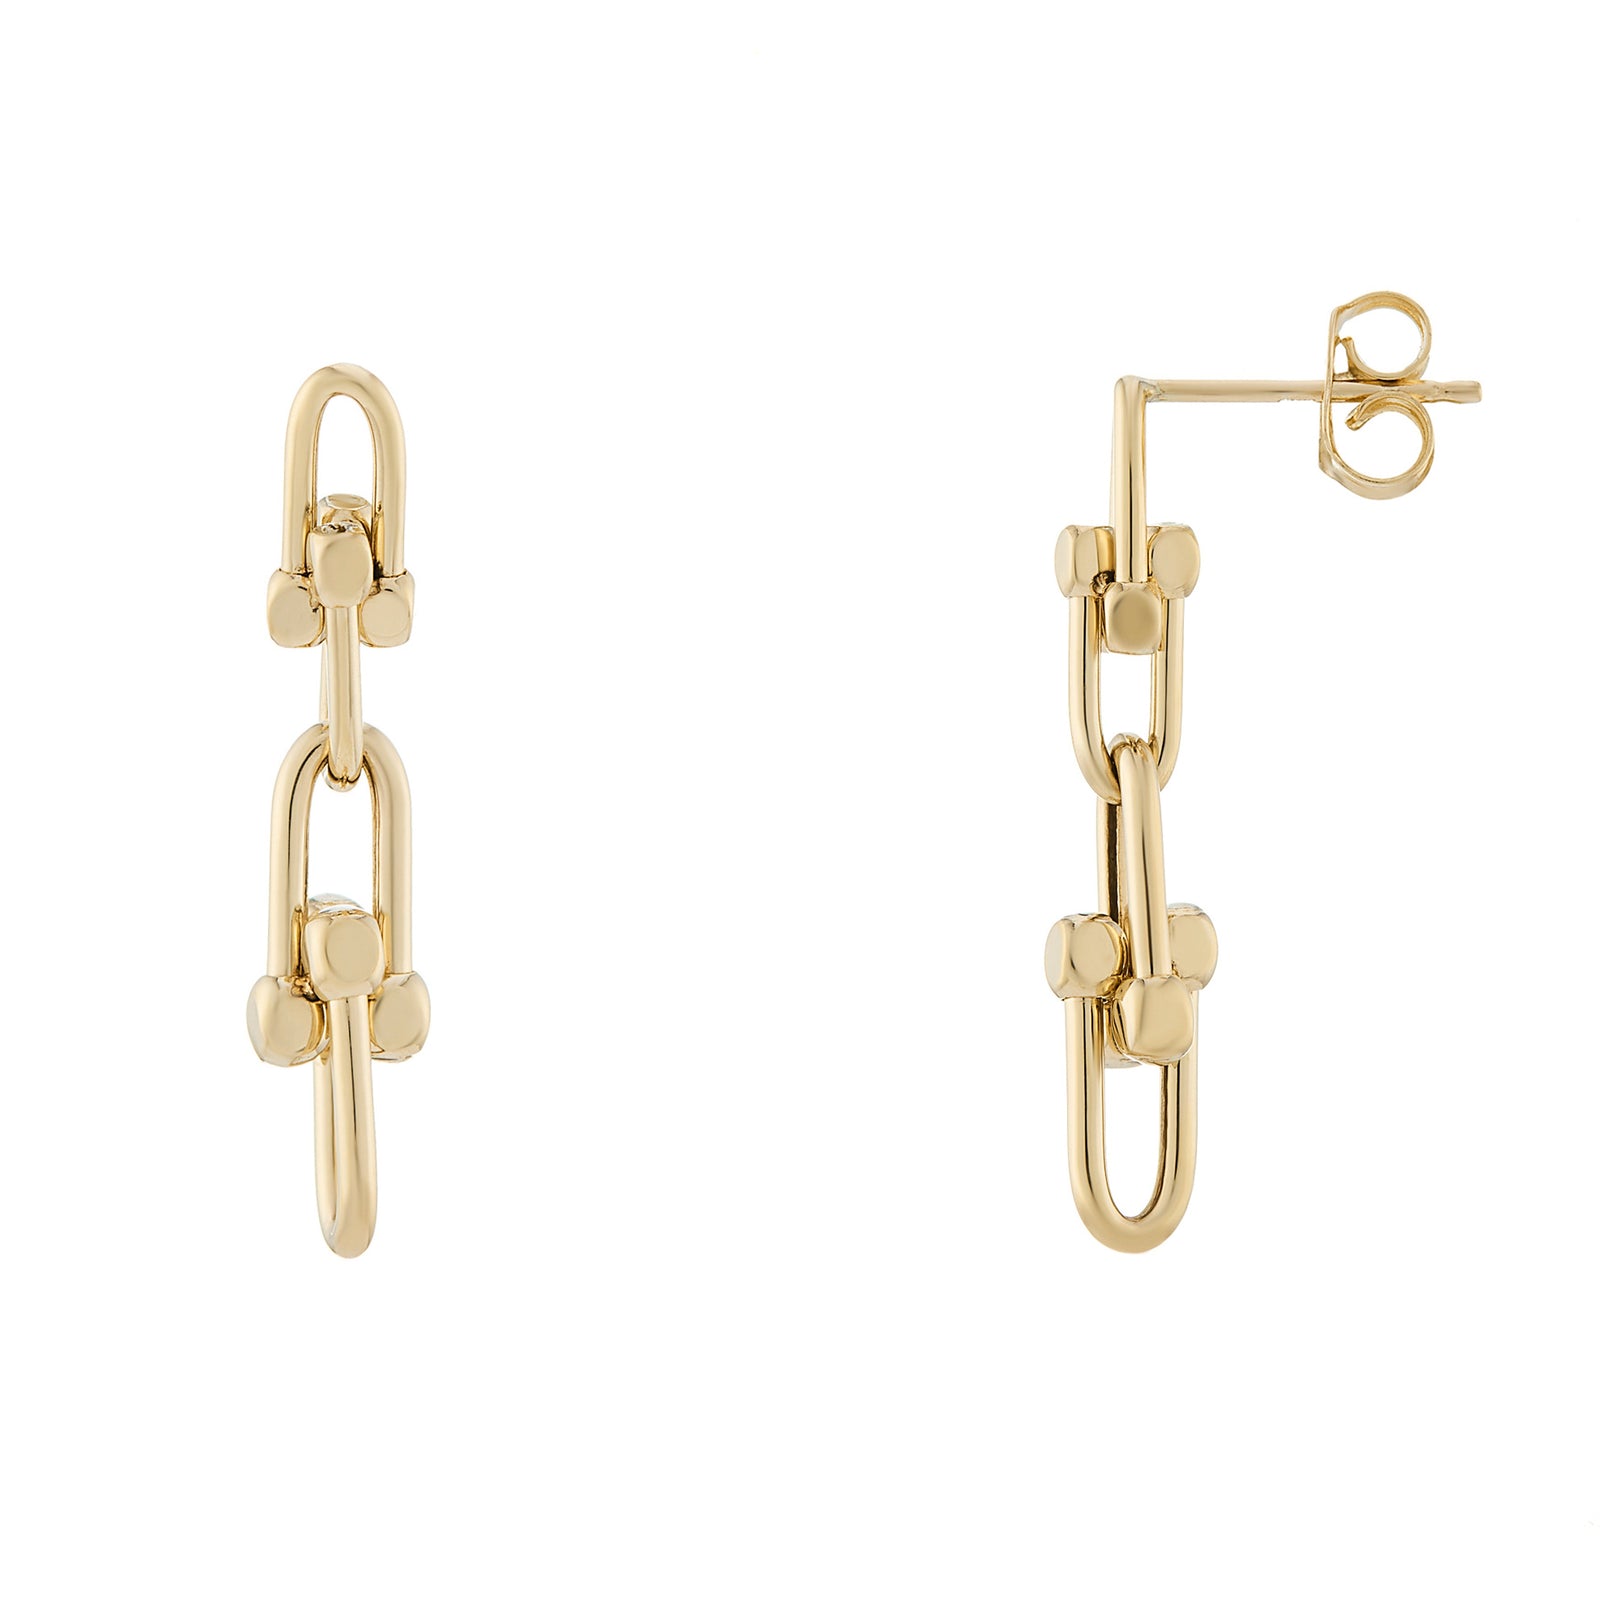 9ct gold chain drop earrings